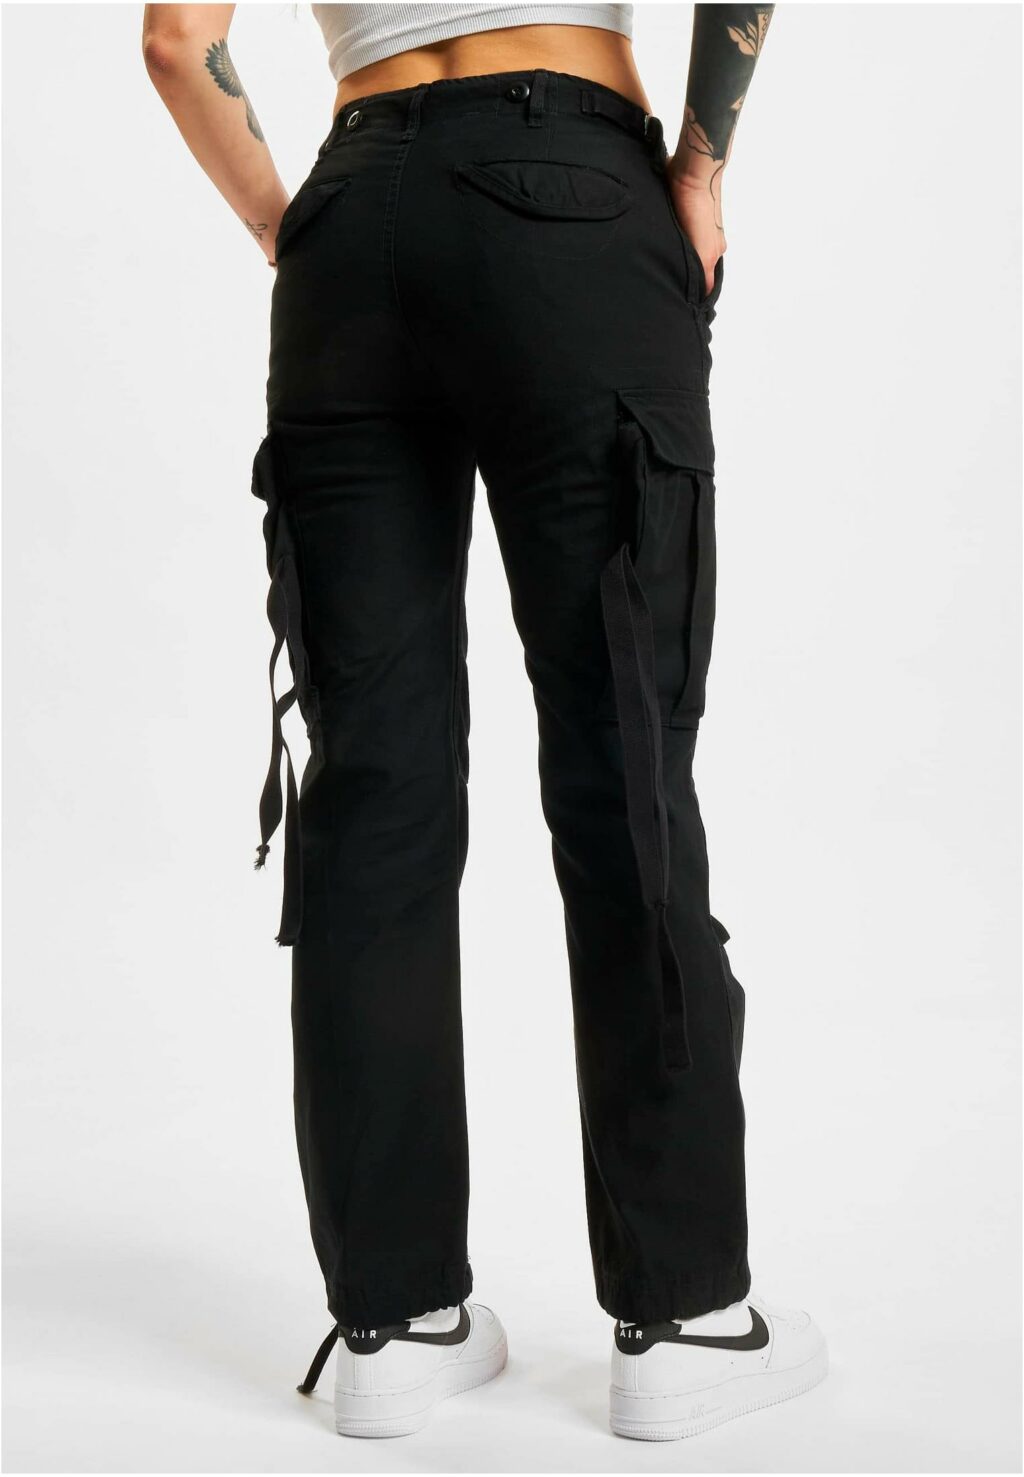 Brandit Ladies M-65 Cargo Pants black BD11001